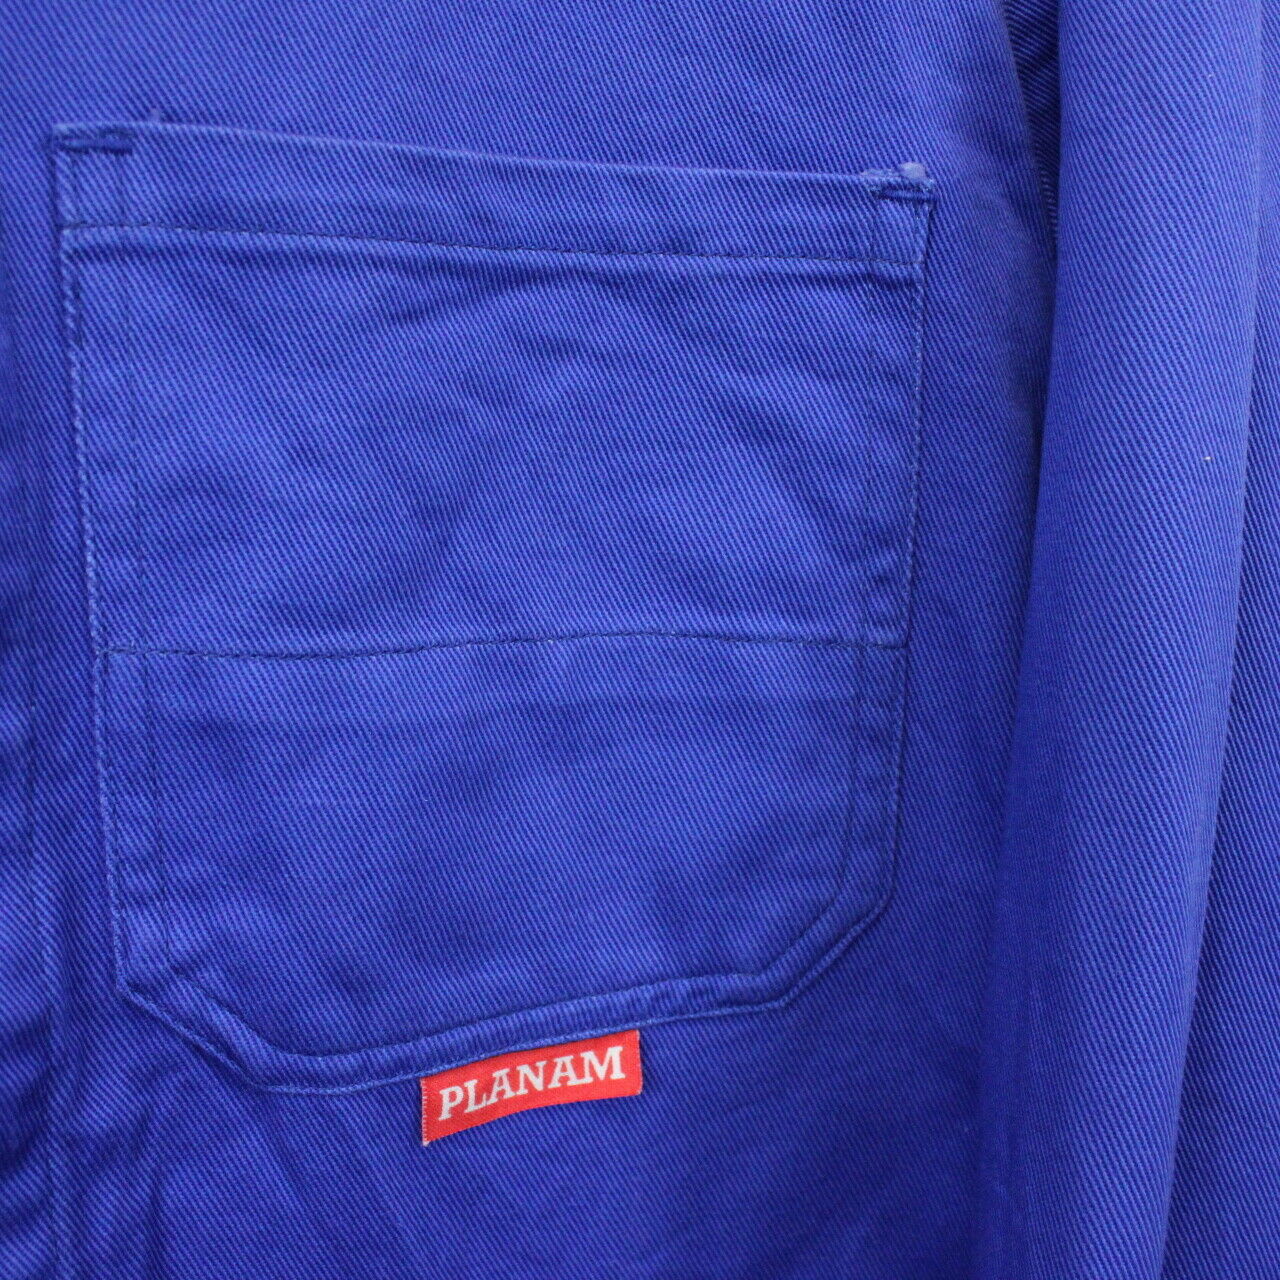 Worker Chore Jacket Blue | Medium